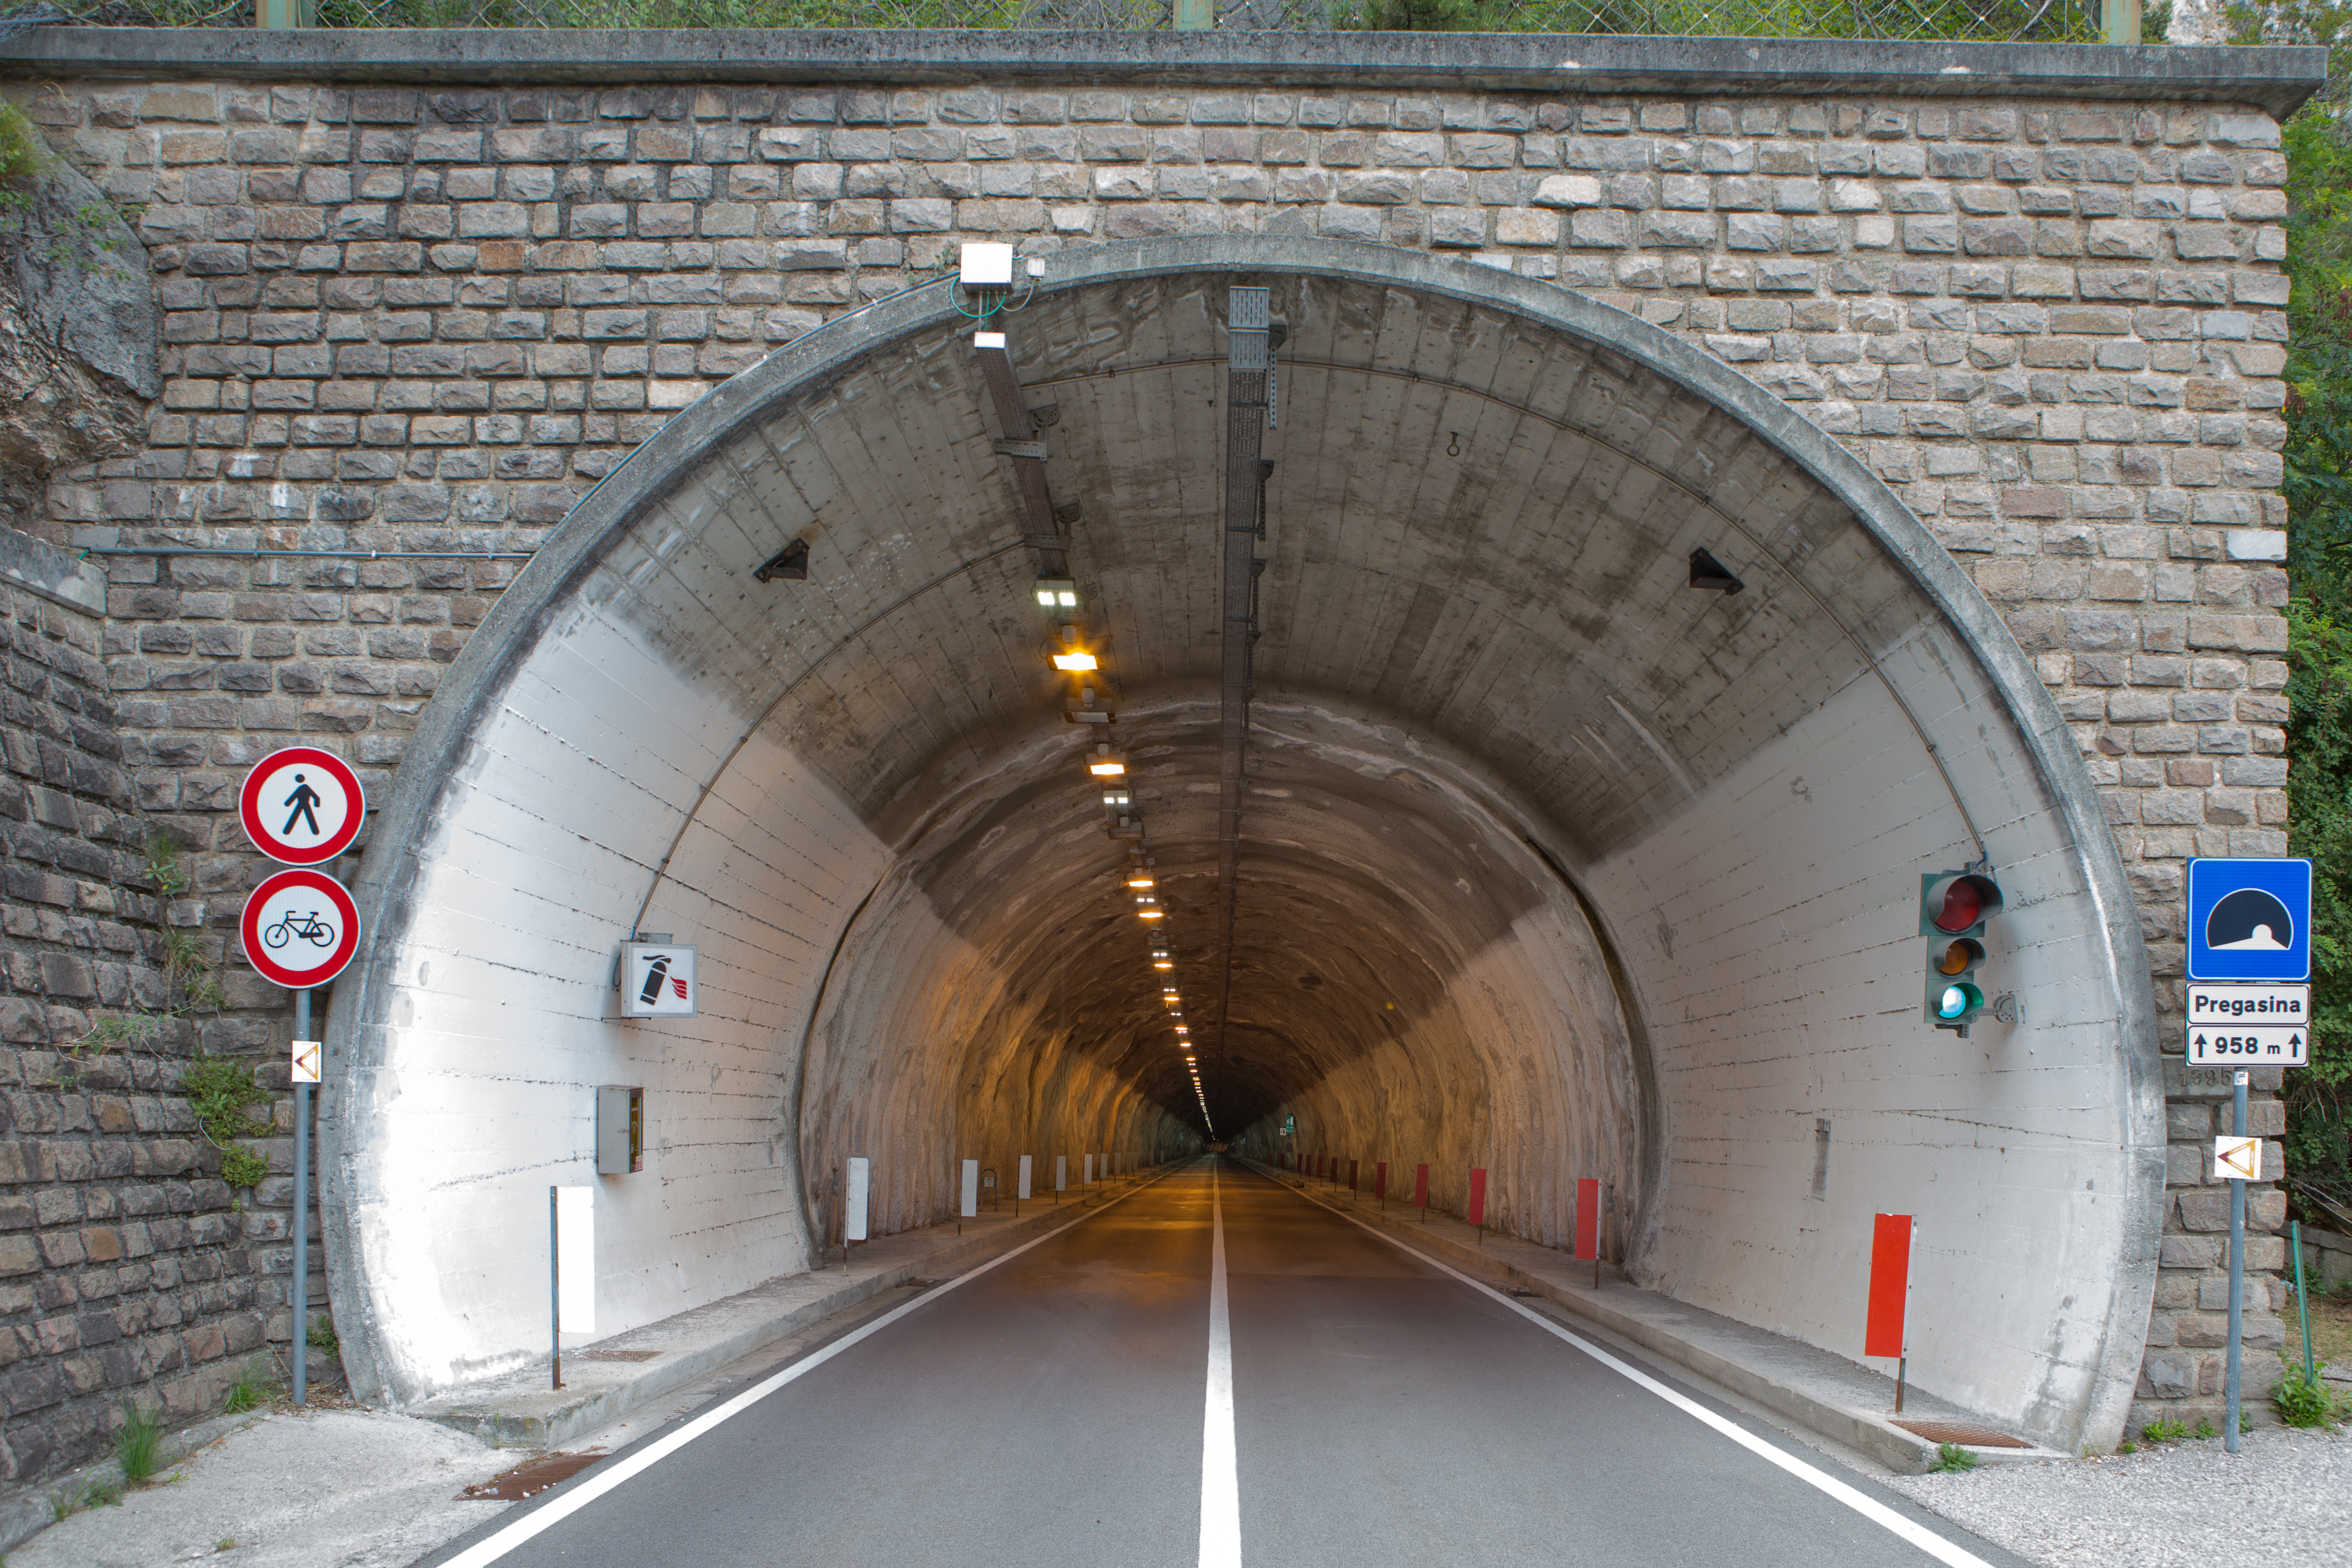 Pregasina tunnel east entrance, Pregasina, Trient, Italy